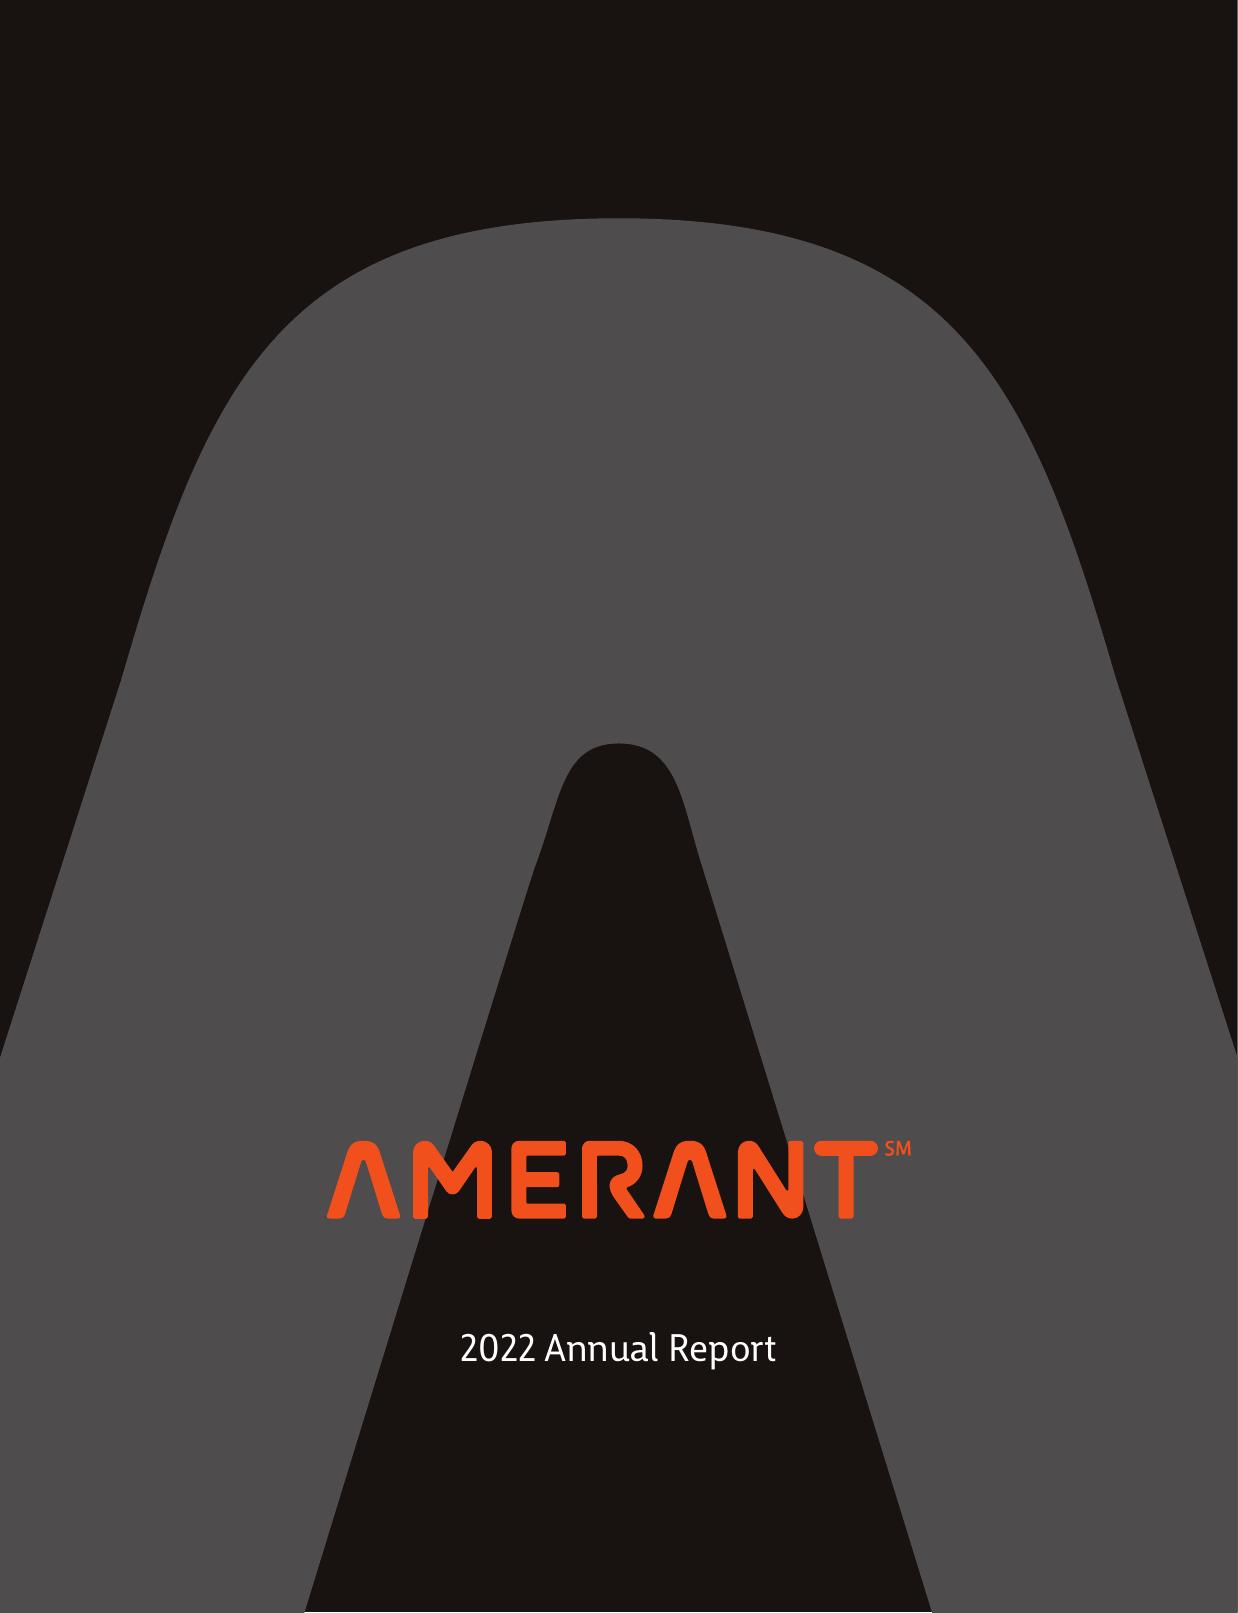 DIB.AE 2022 Annual Report